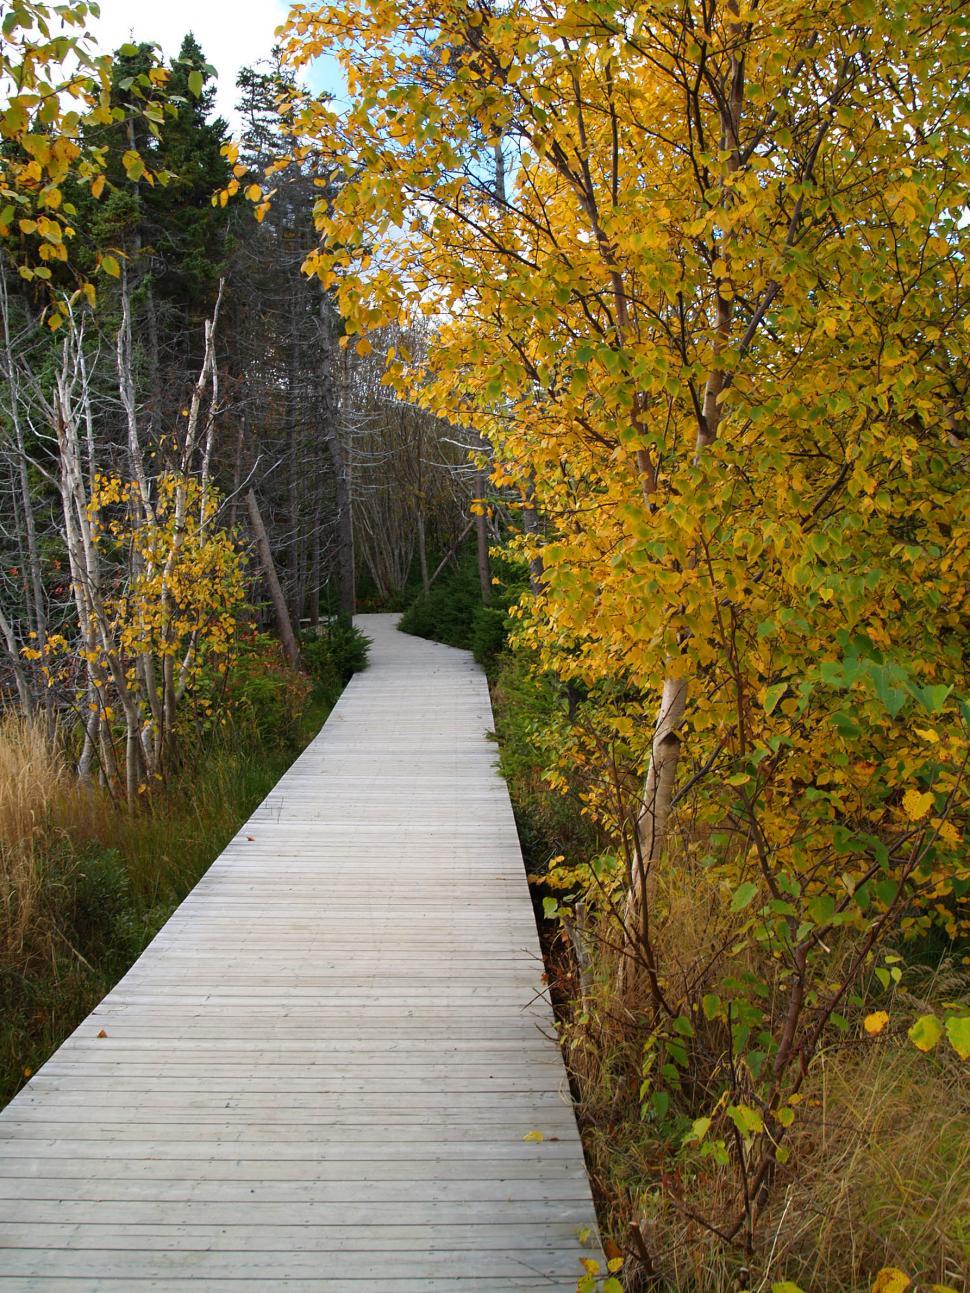 Free Image of Autumn Boardwalk 